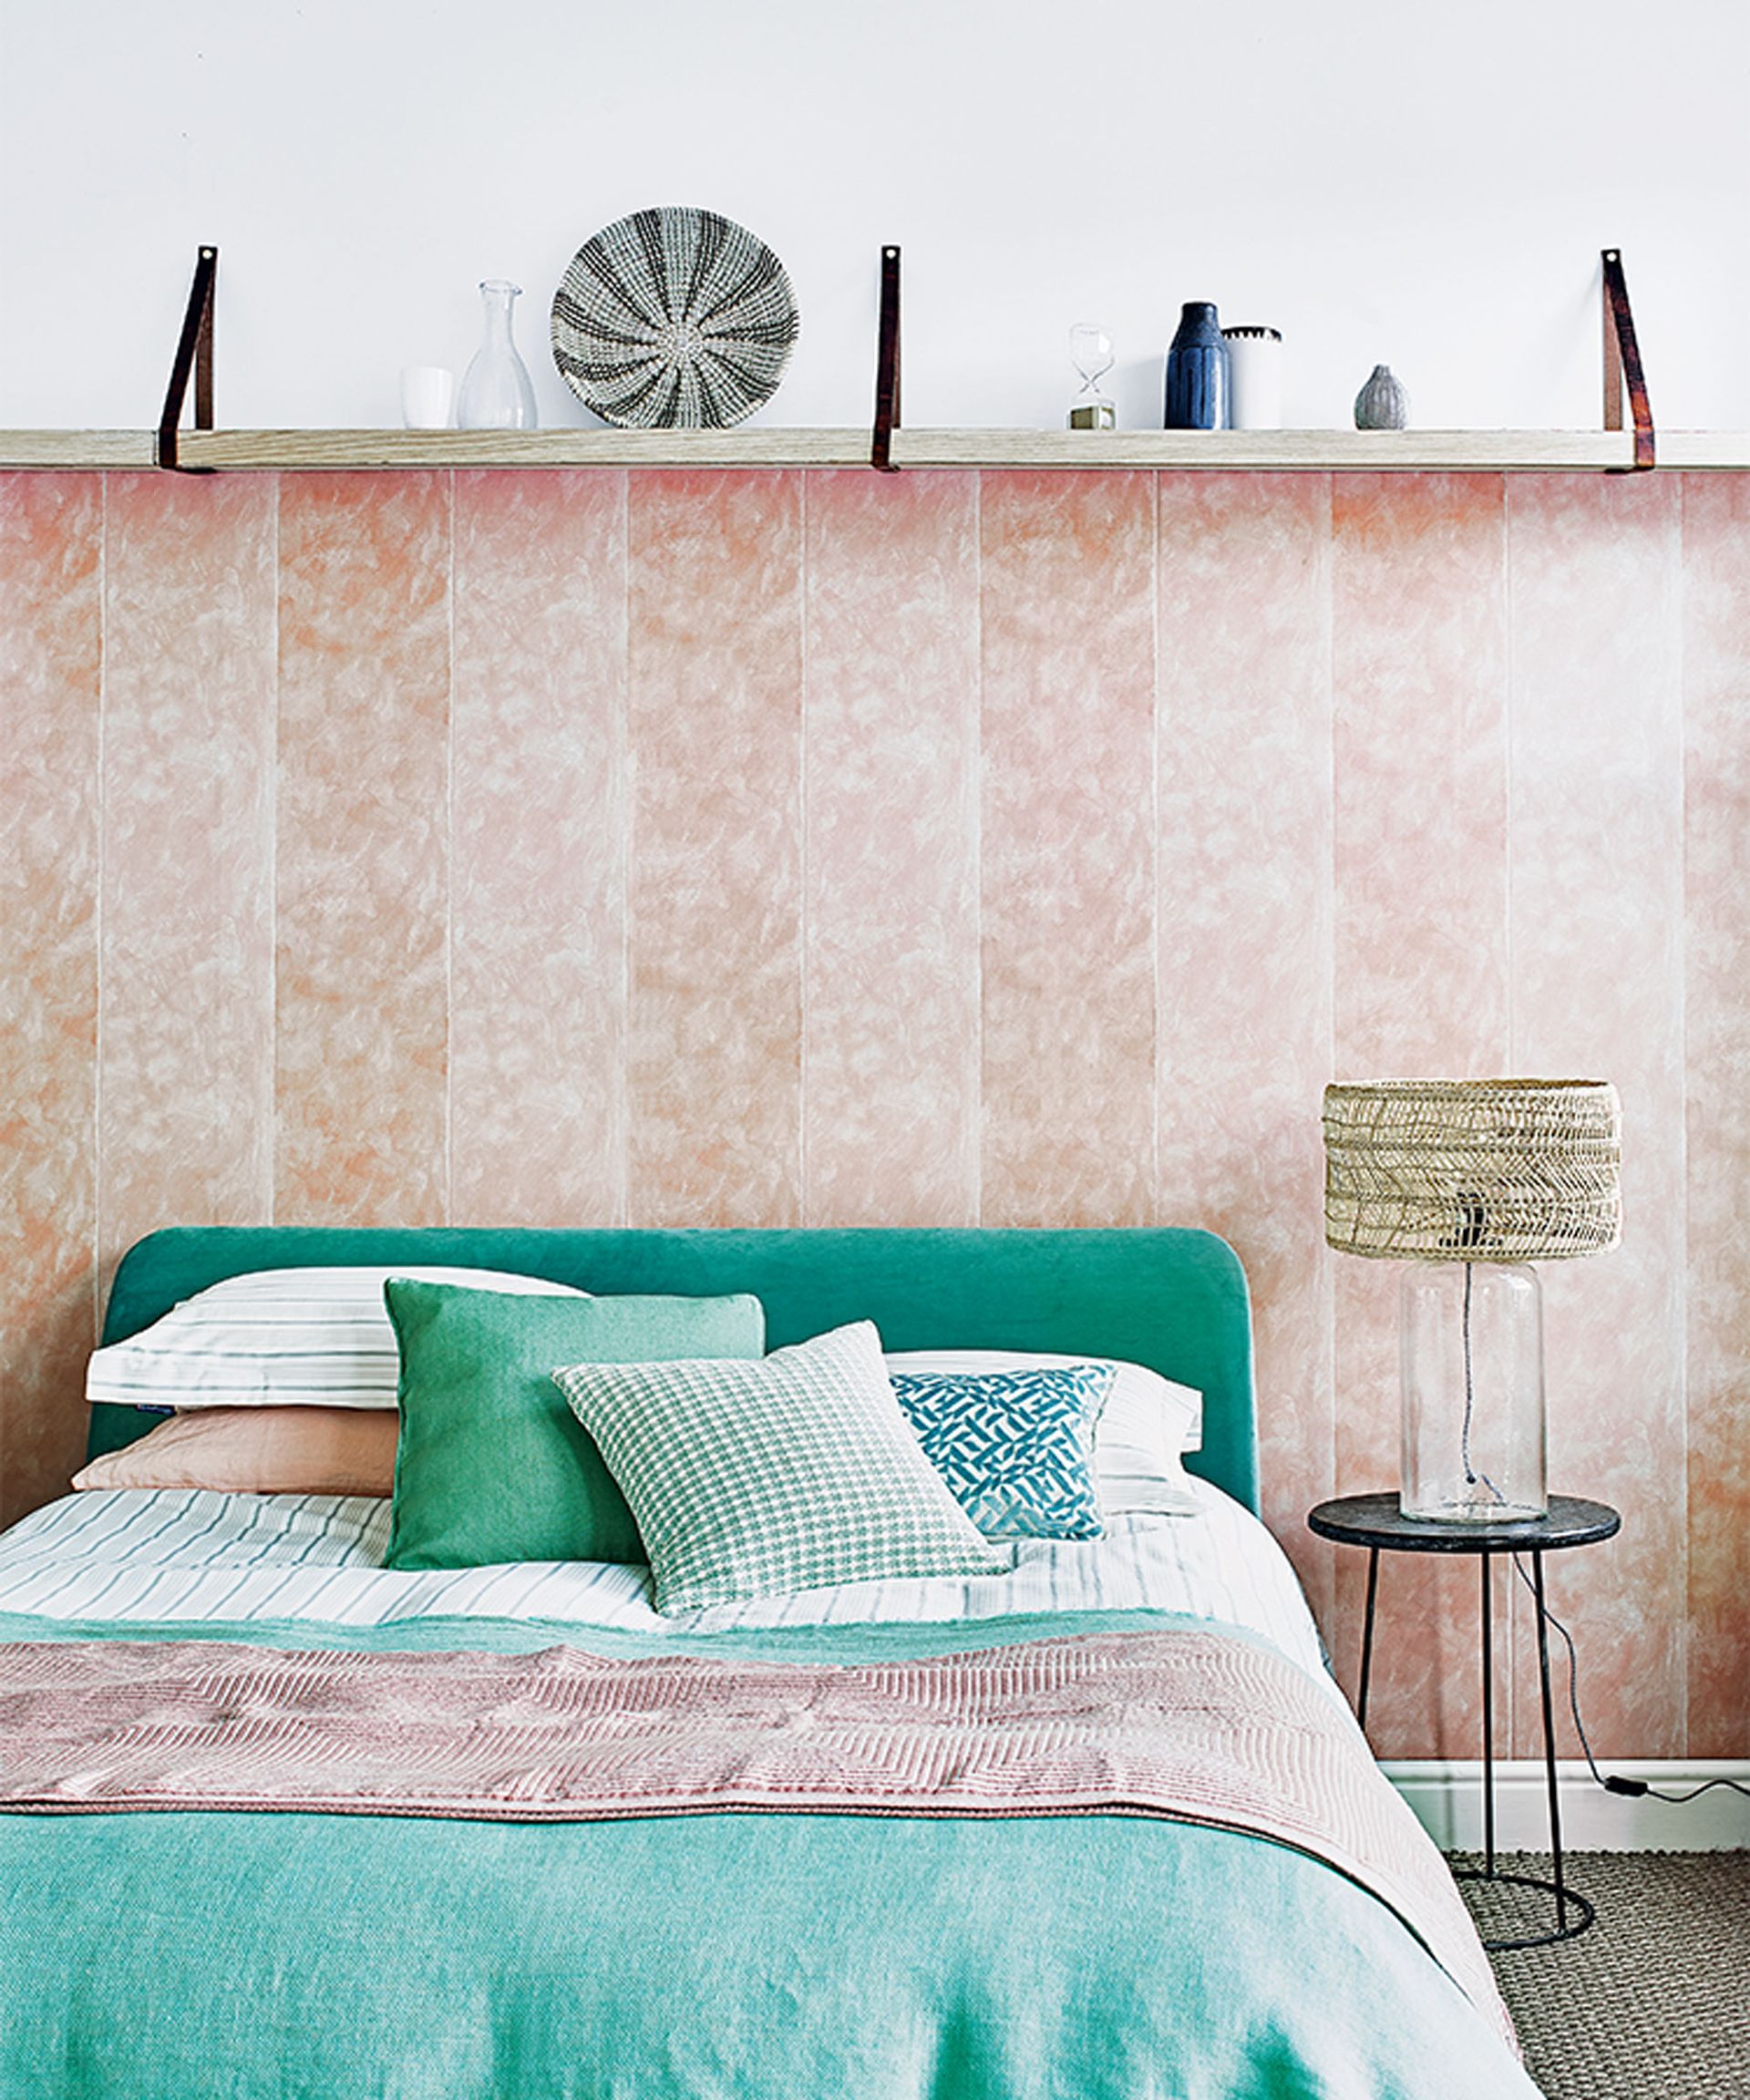 Bedroom shelving ideas: 10 stylish bedroom shelves